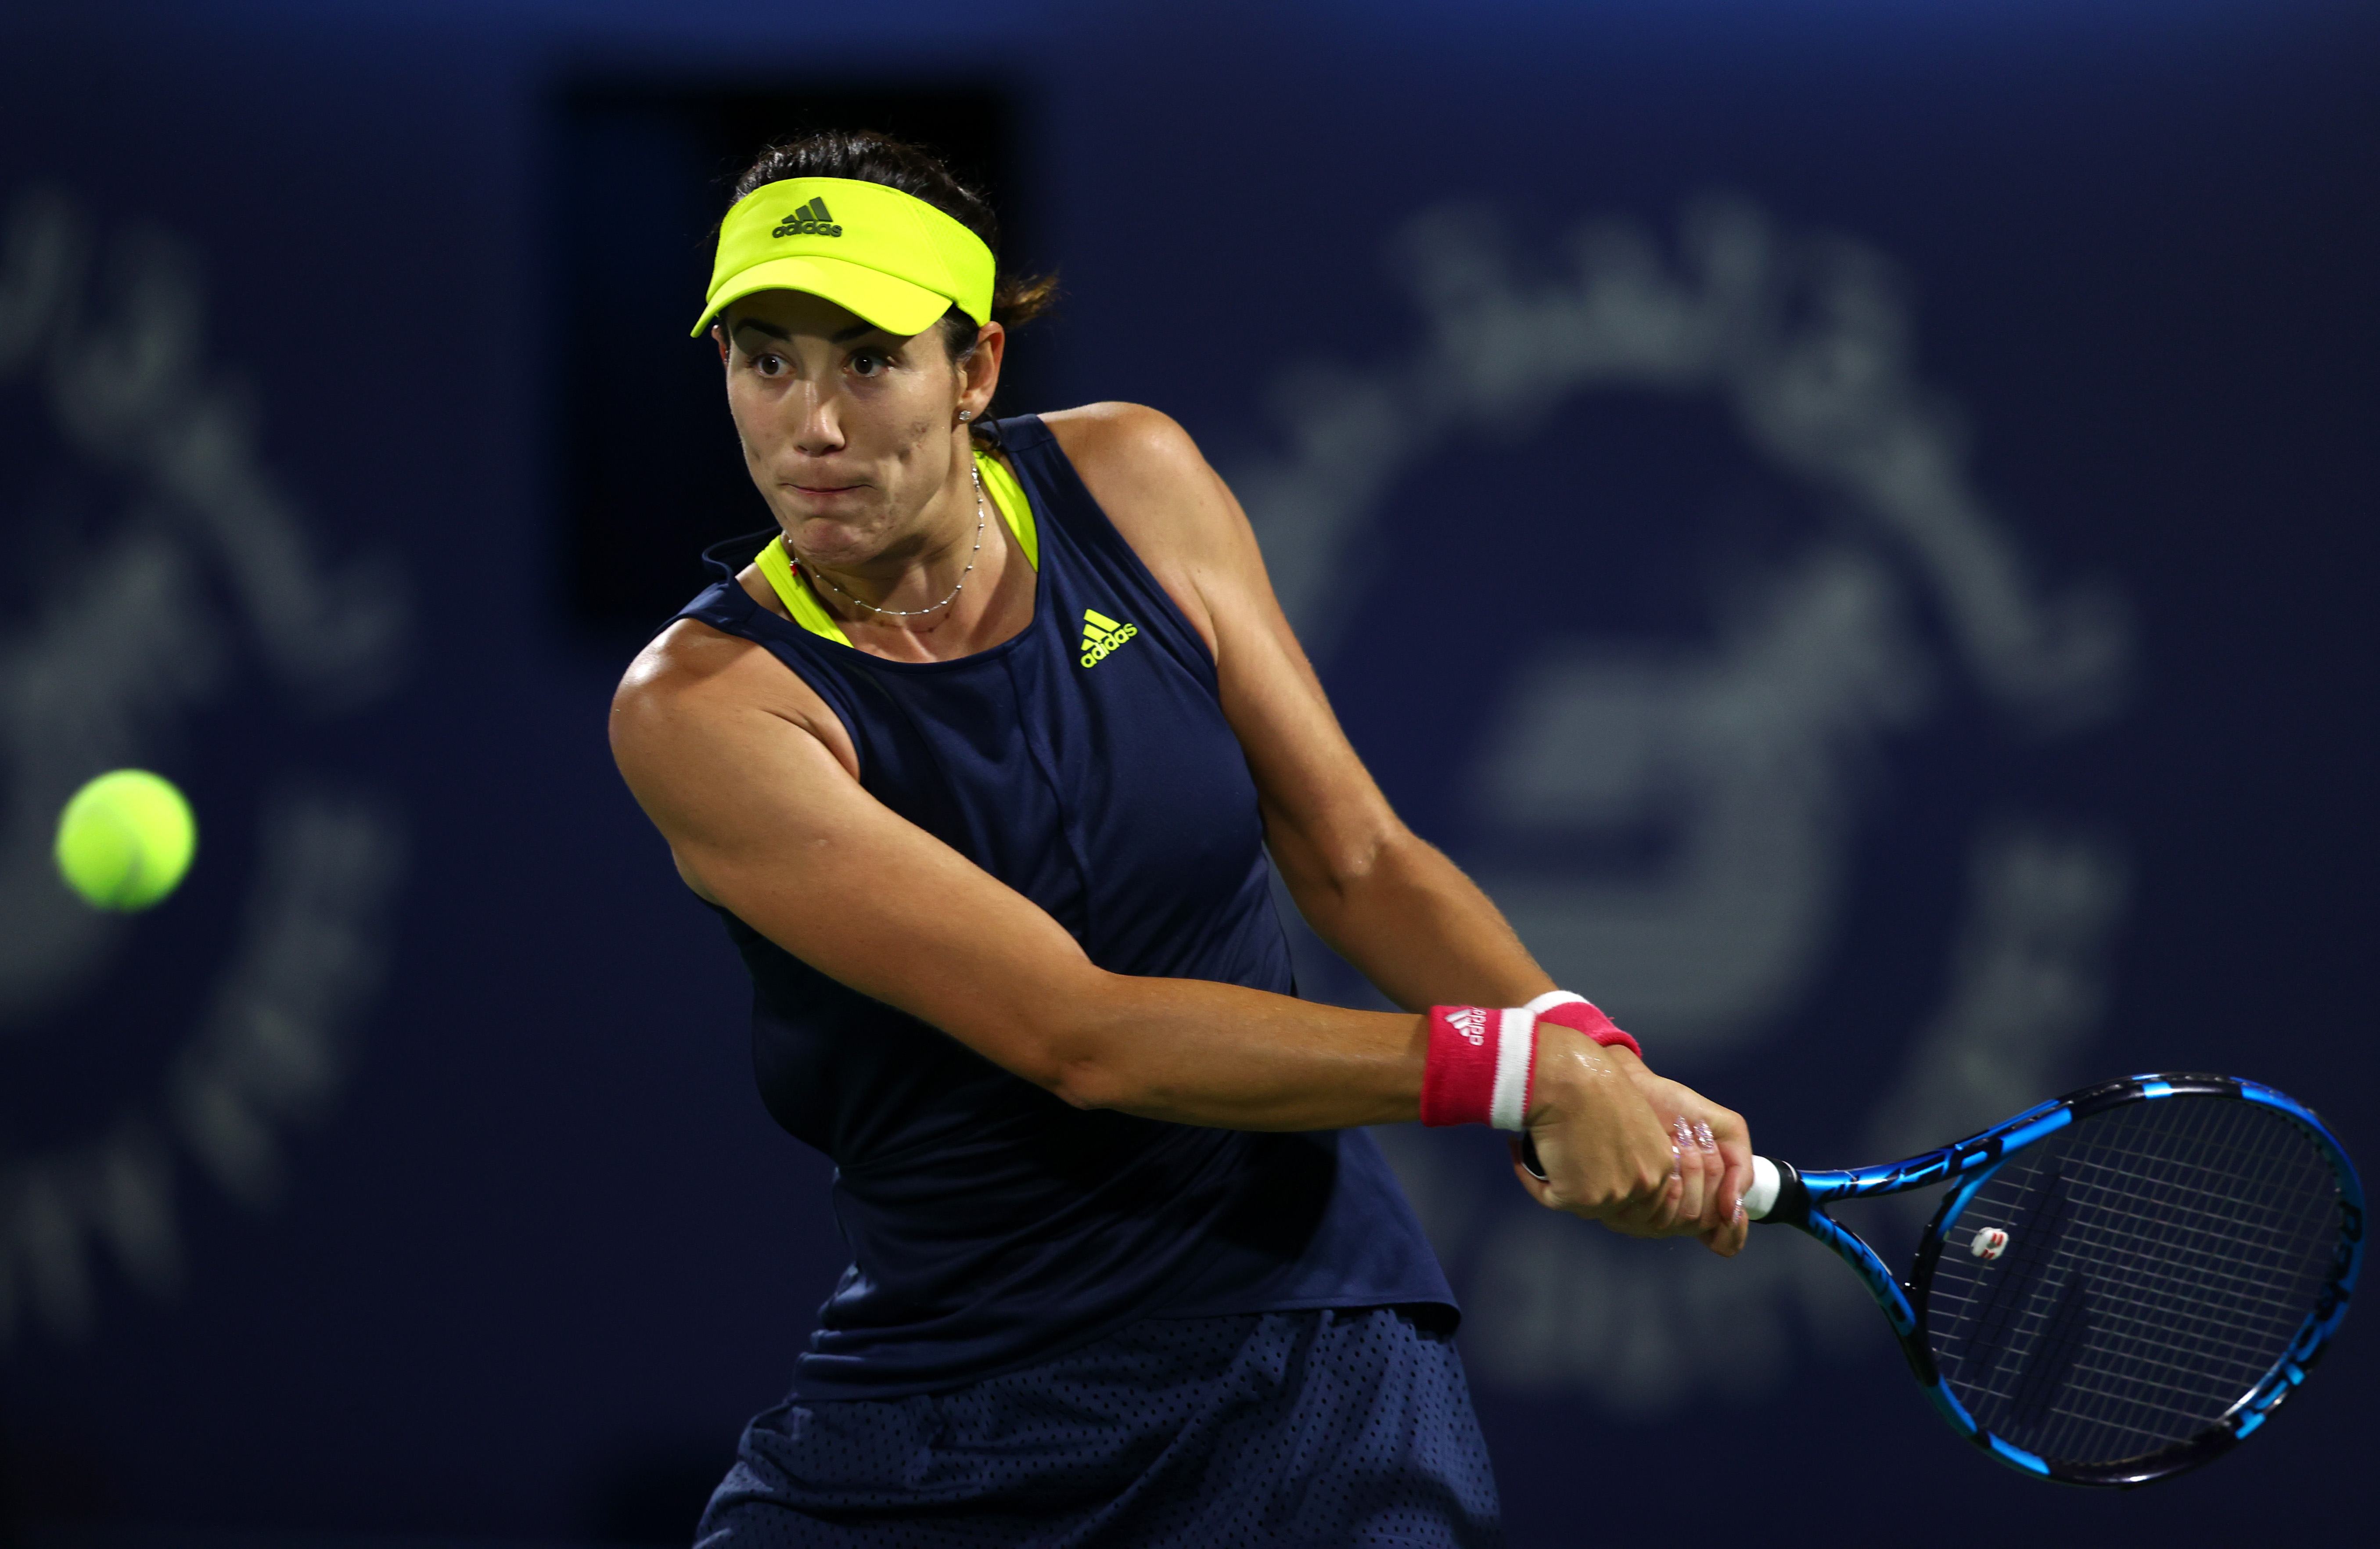 Muguruza wins WTA Dubai Tennis Championships after beating Krejcikova